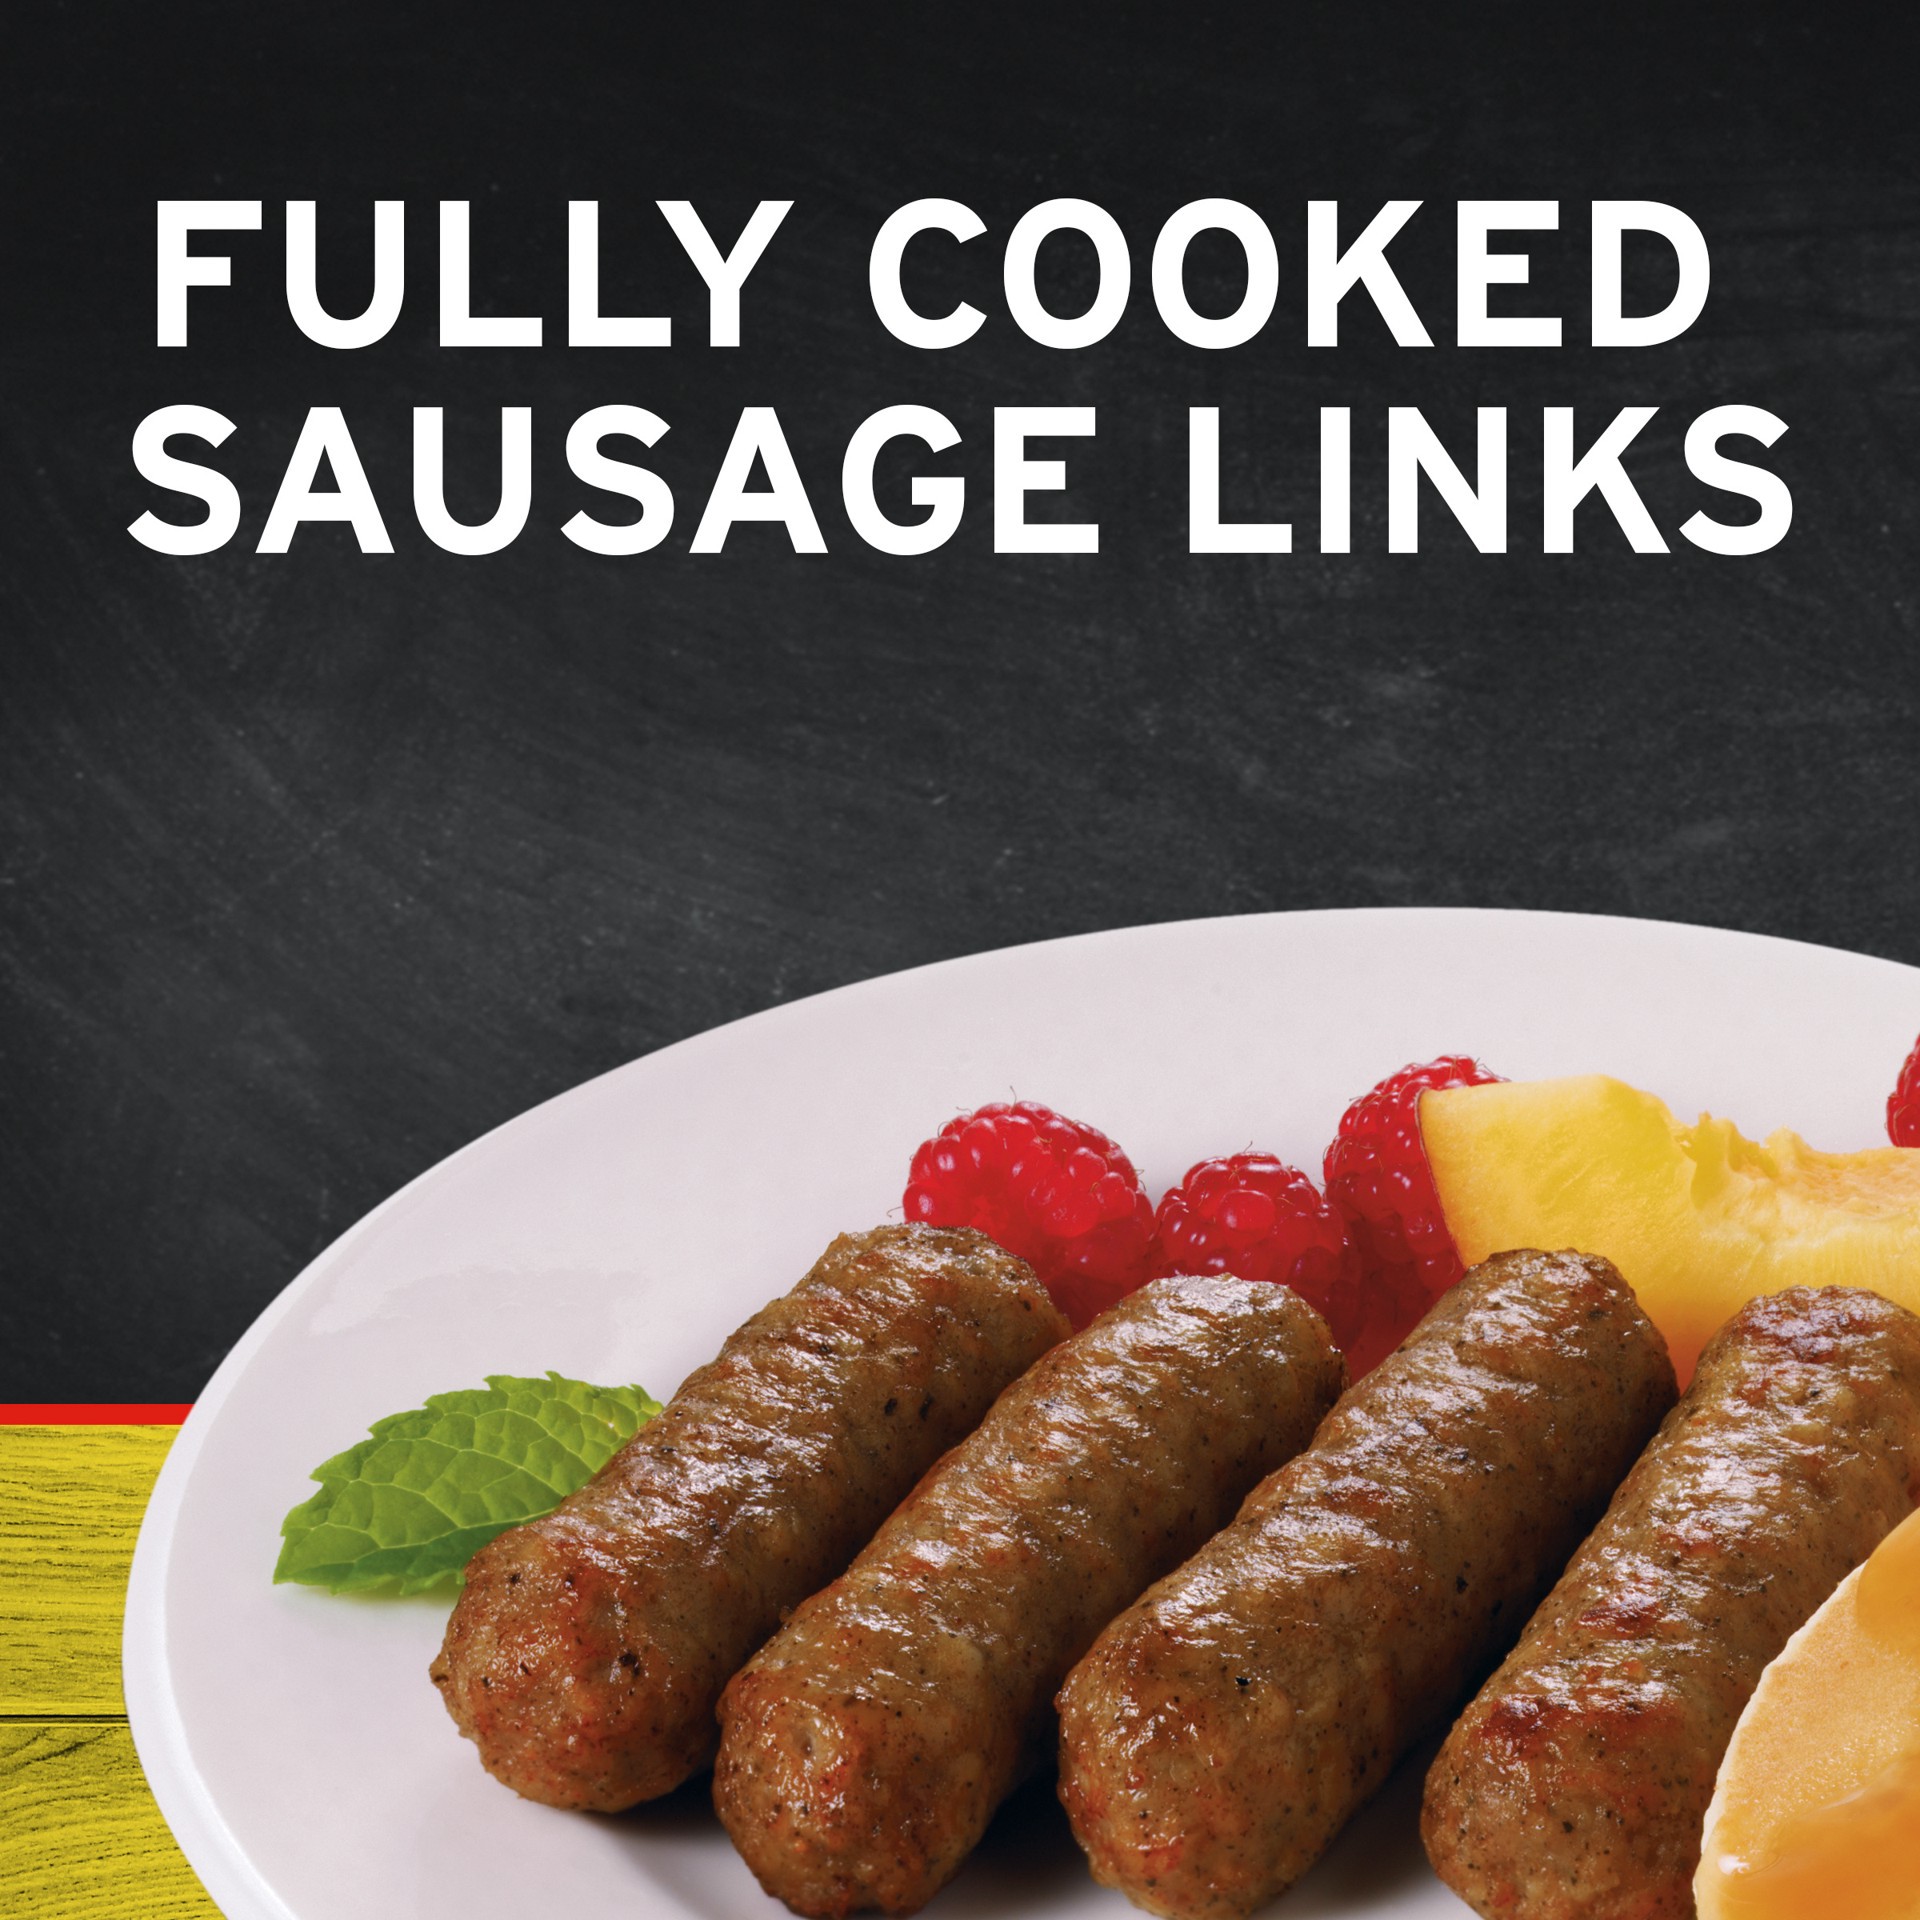 slide 3 of 5, Banquet Brown 'N Serve Original Fully Cooked Sausage Links, Frozen Meat, 10 Count, 6.4 OZ, 10 ct